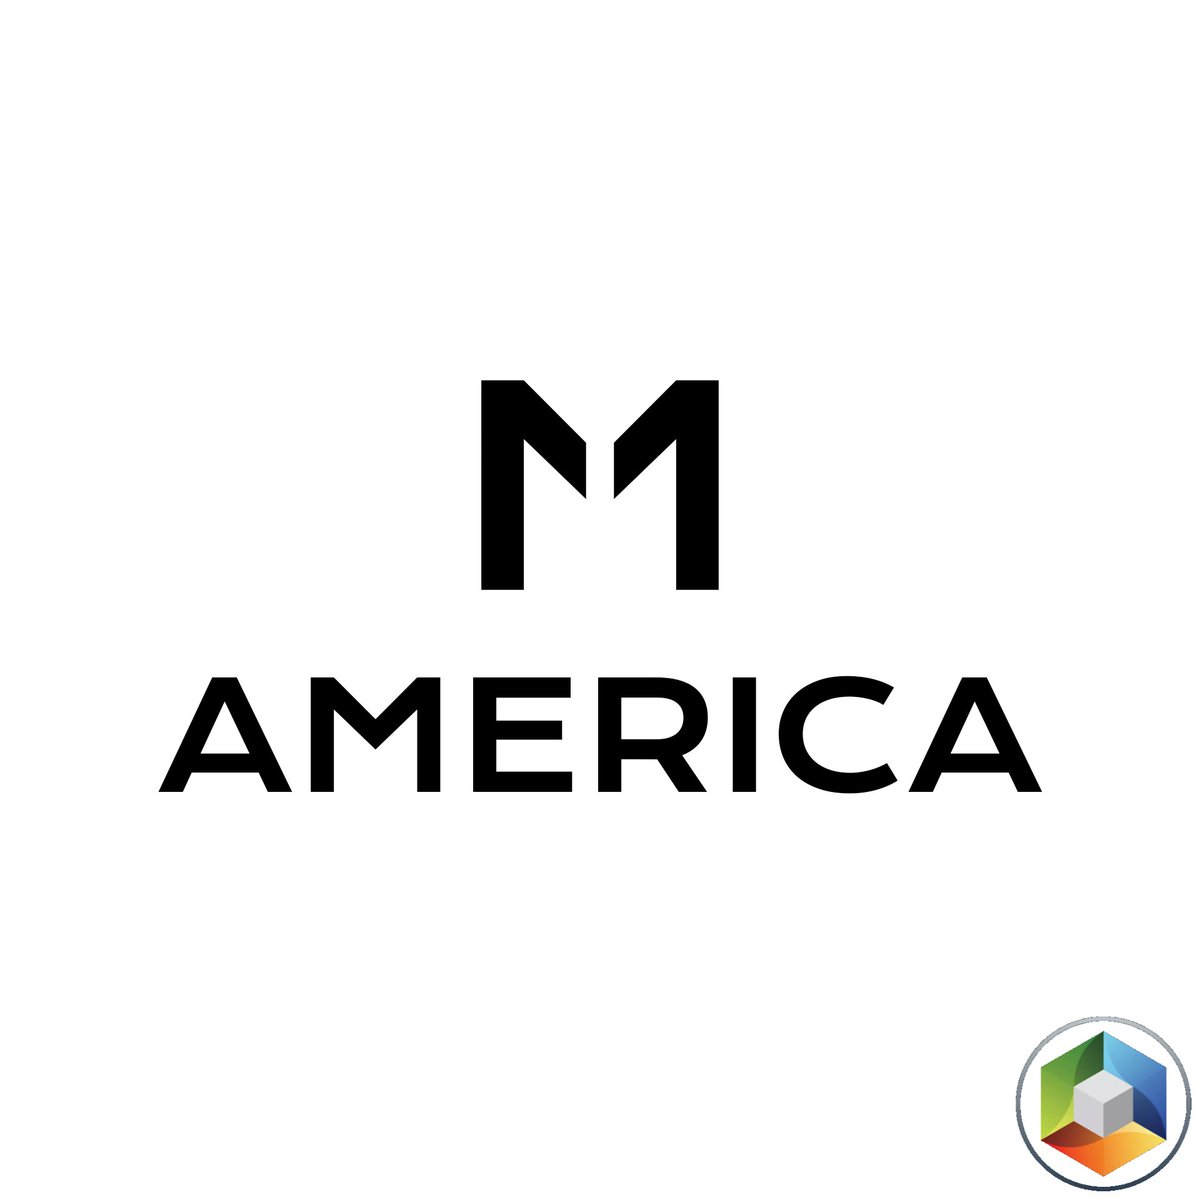 America Design Art.

#logo #logos #logodesign #logomaker #DESIGNART #design #designinspiration #Font #Designship2024 #designthinking #design #designjobs #DesignGrowth #designtwitter #logodesigner